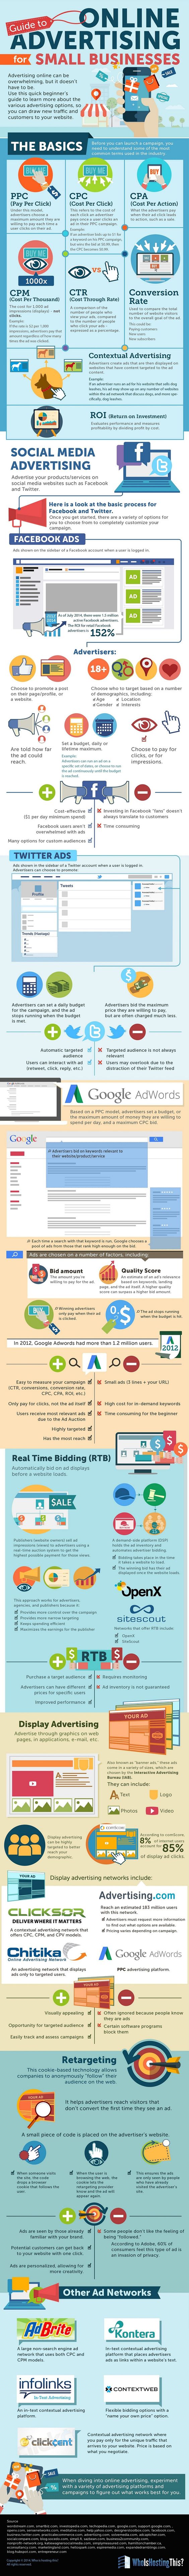 Guide To #InternetAdvertising For Small Businesses - #Socialmedia